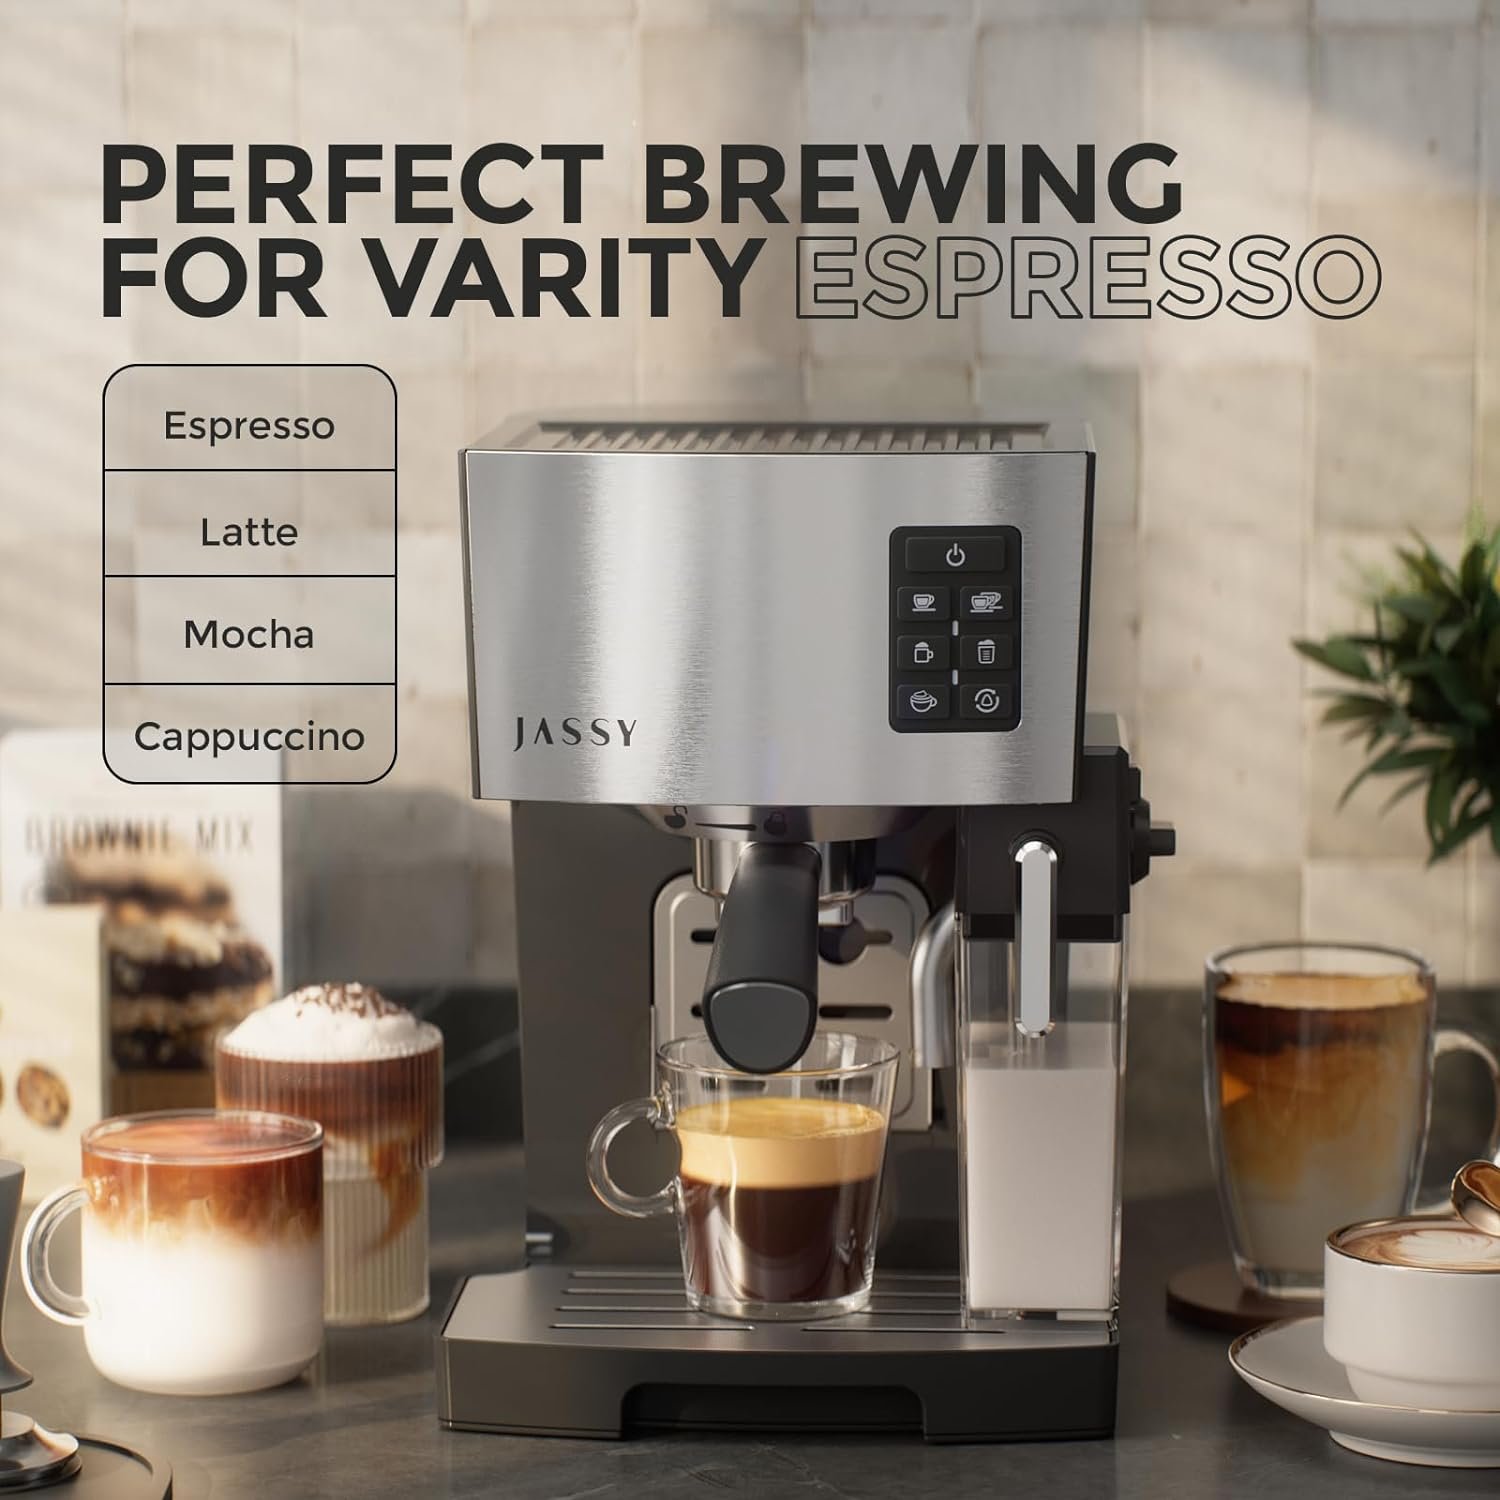 JASSY Espresso Coffee Machine 20 Bar Latte Maker with Powerful Milk Tank for Home Barista,One-Touch Brewing for Espresso/Mocha/Cappuccino/Latte/1250W